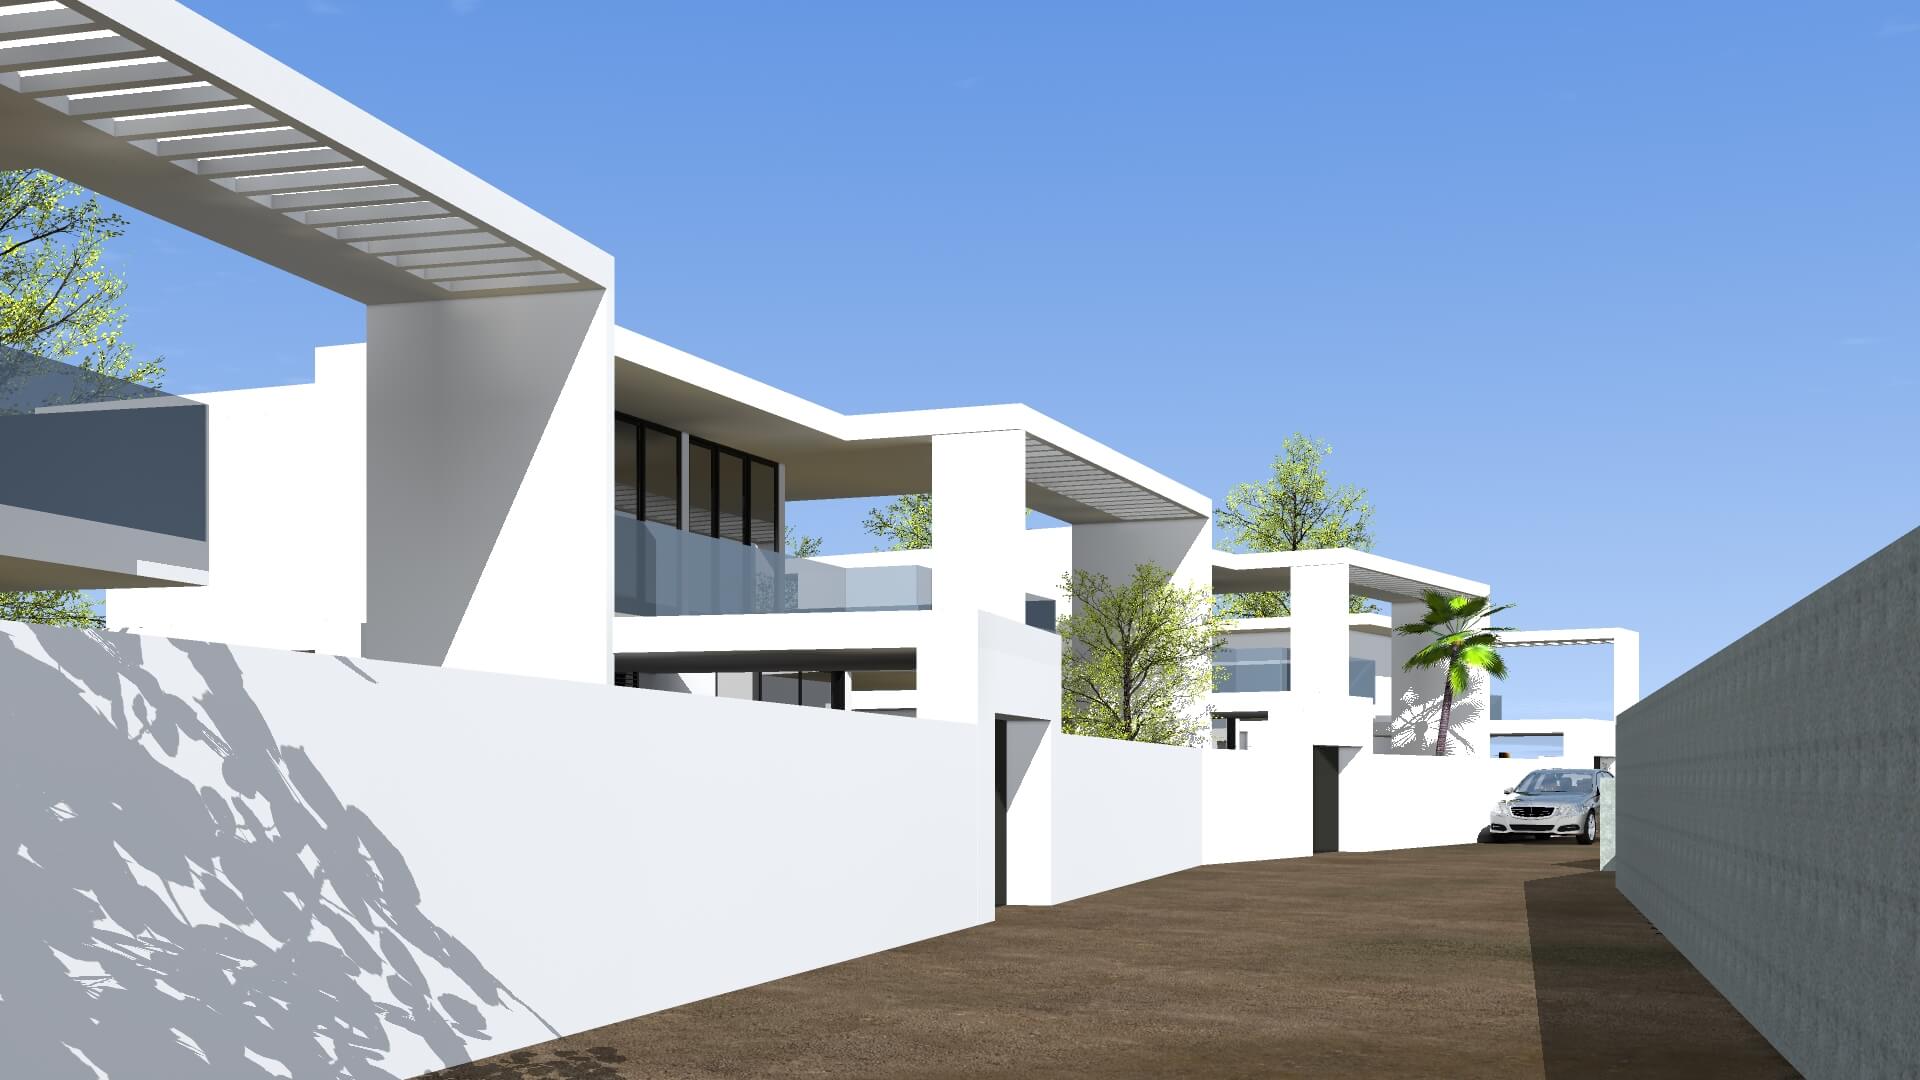 Façade le la villa moderne de Saly de Linea Concept au Sénégal